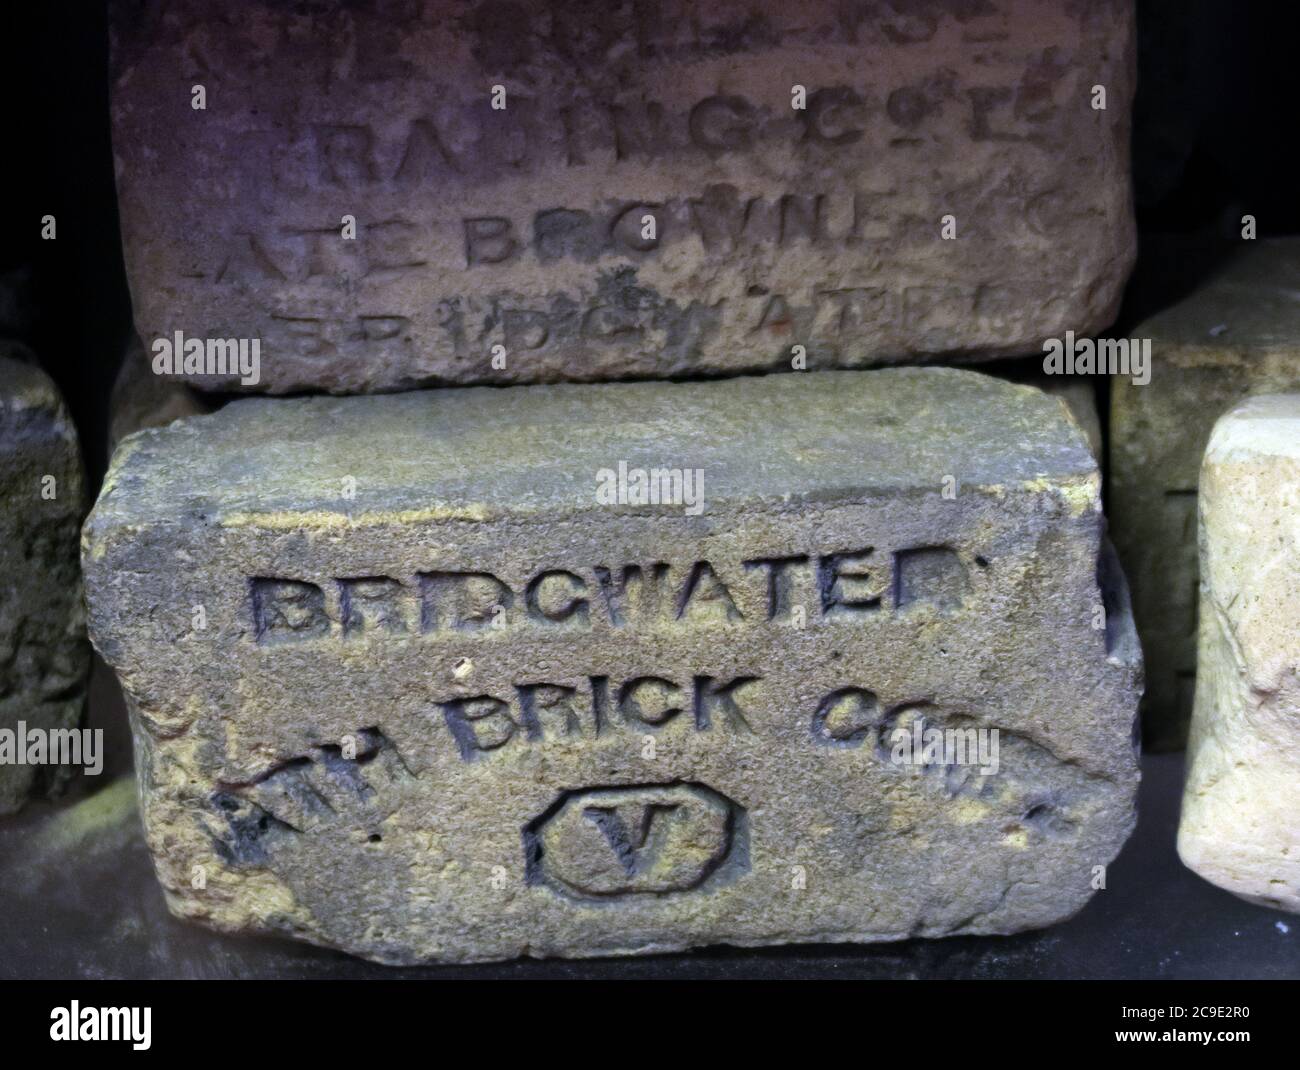 Bridgwater Brick Company, Bricks, historisch, Baustoffe, Somerset, Südwesten, England, UK - Bath Brick Co Stockfoto